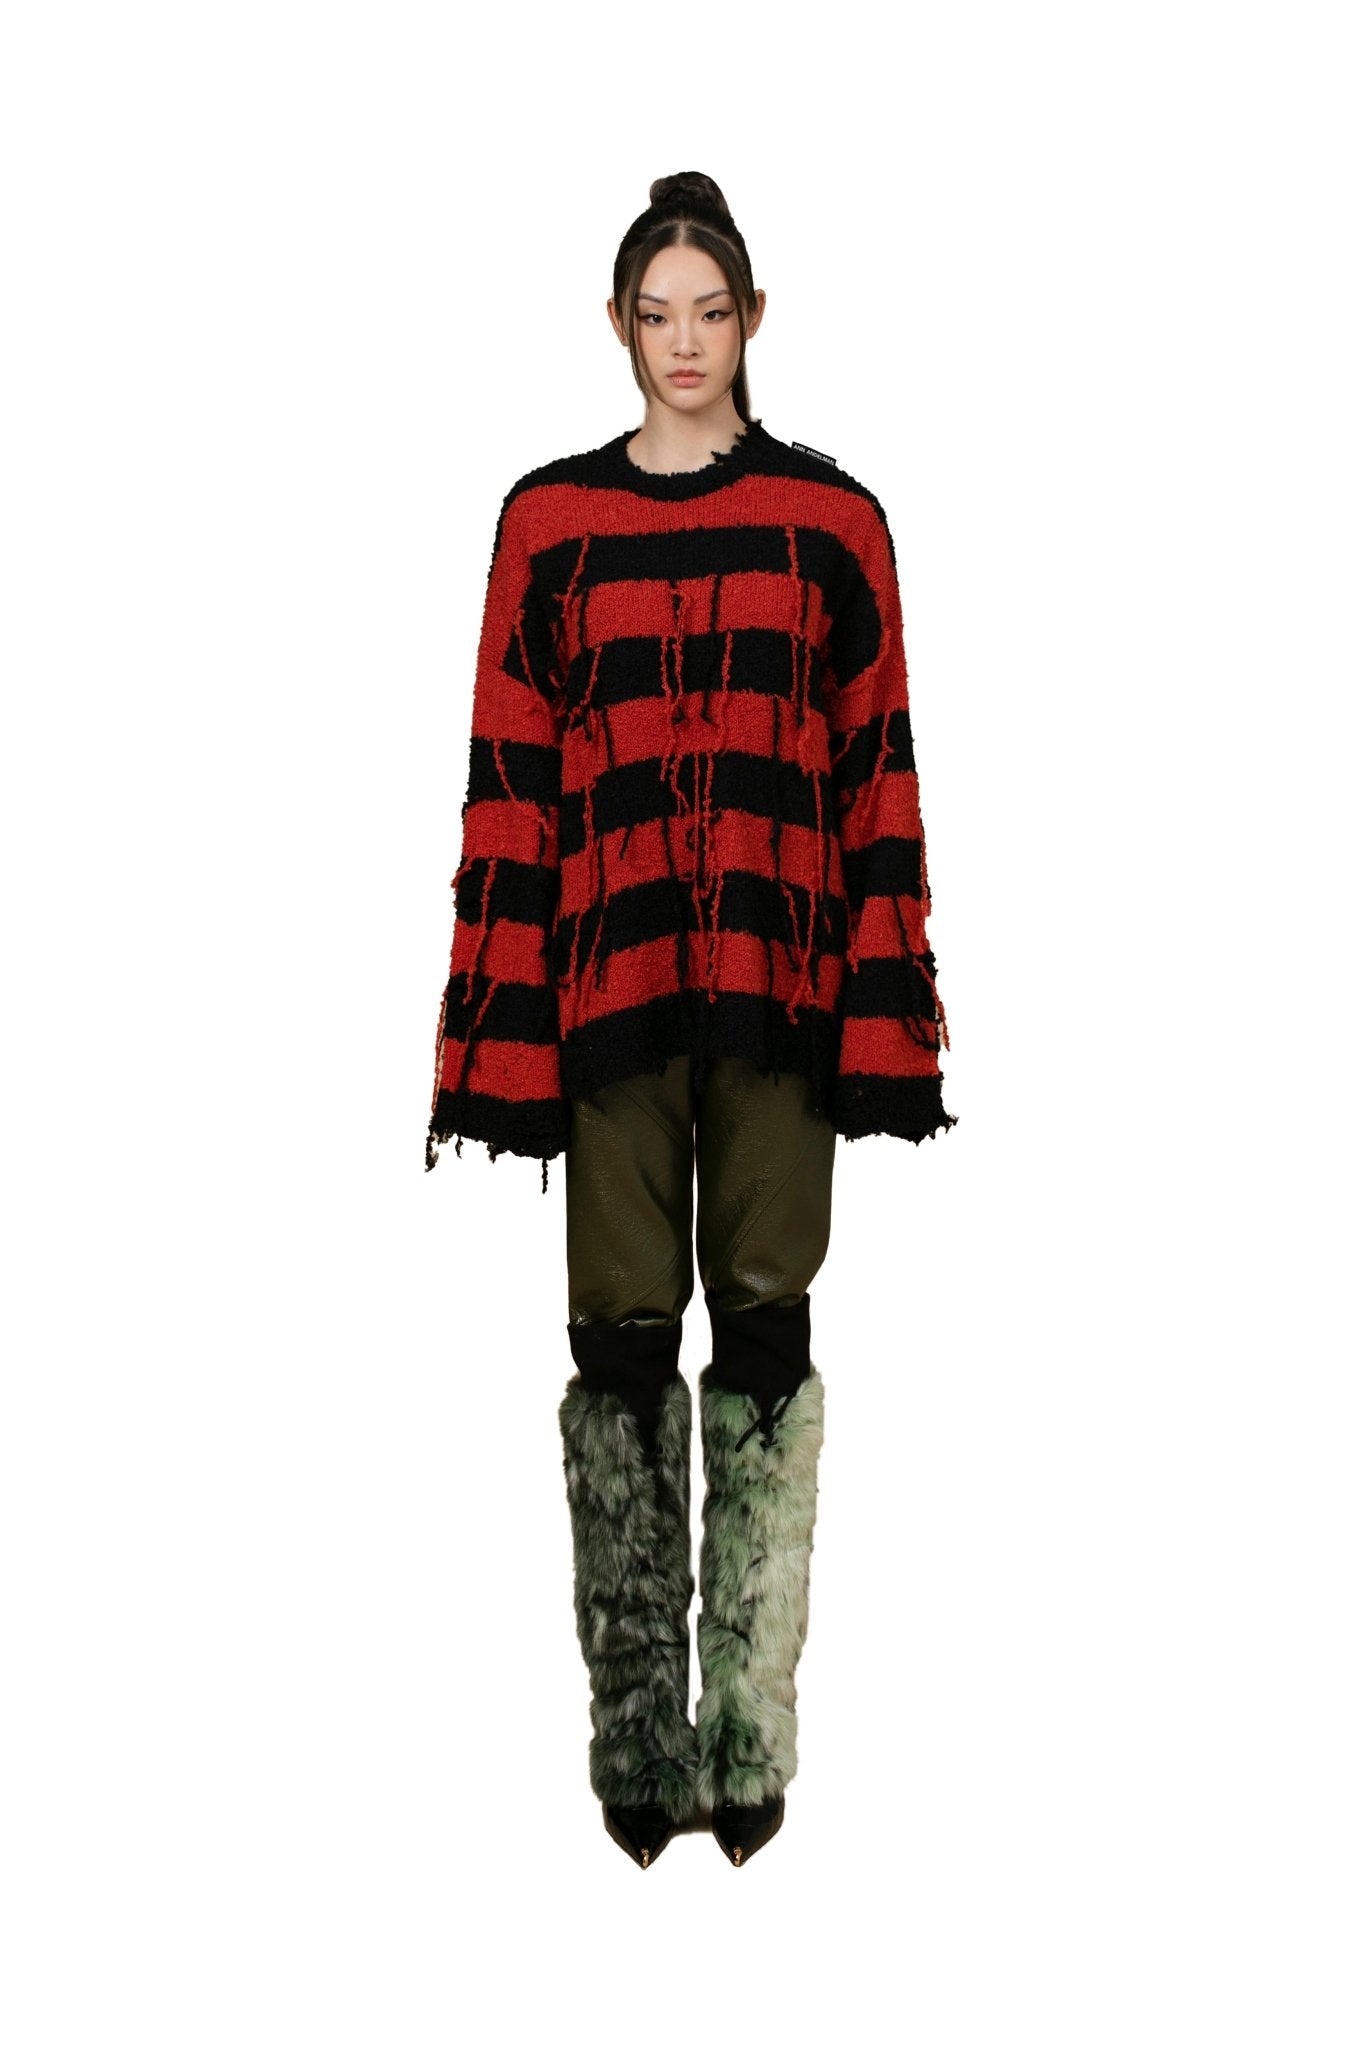 ANN ANDELMAN Tassel Pullover Sweater Black & Red | MADA IN CHINA